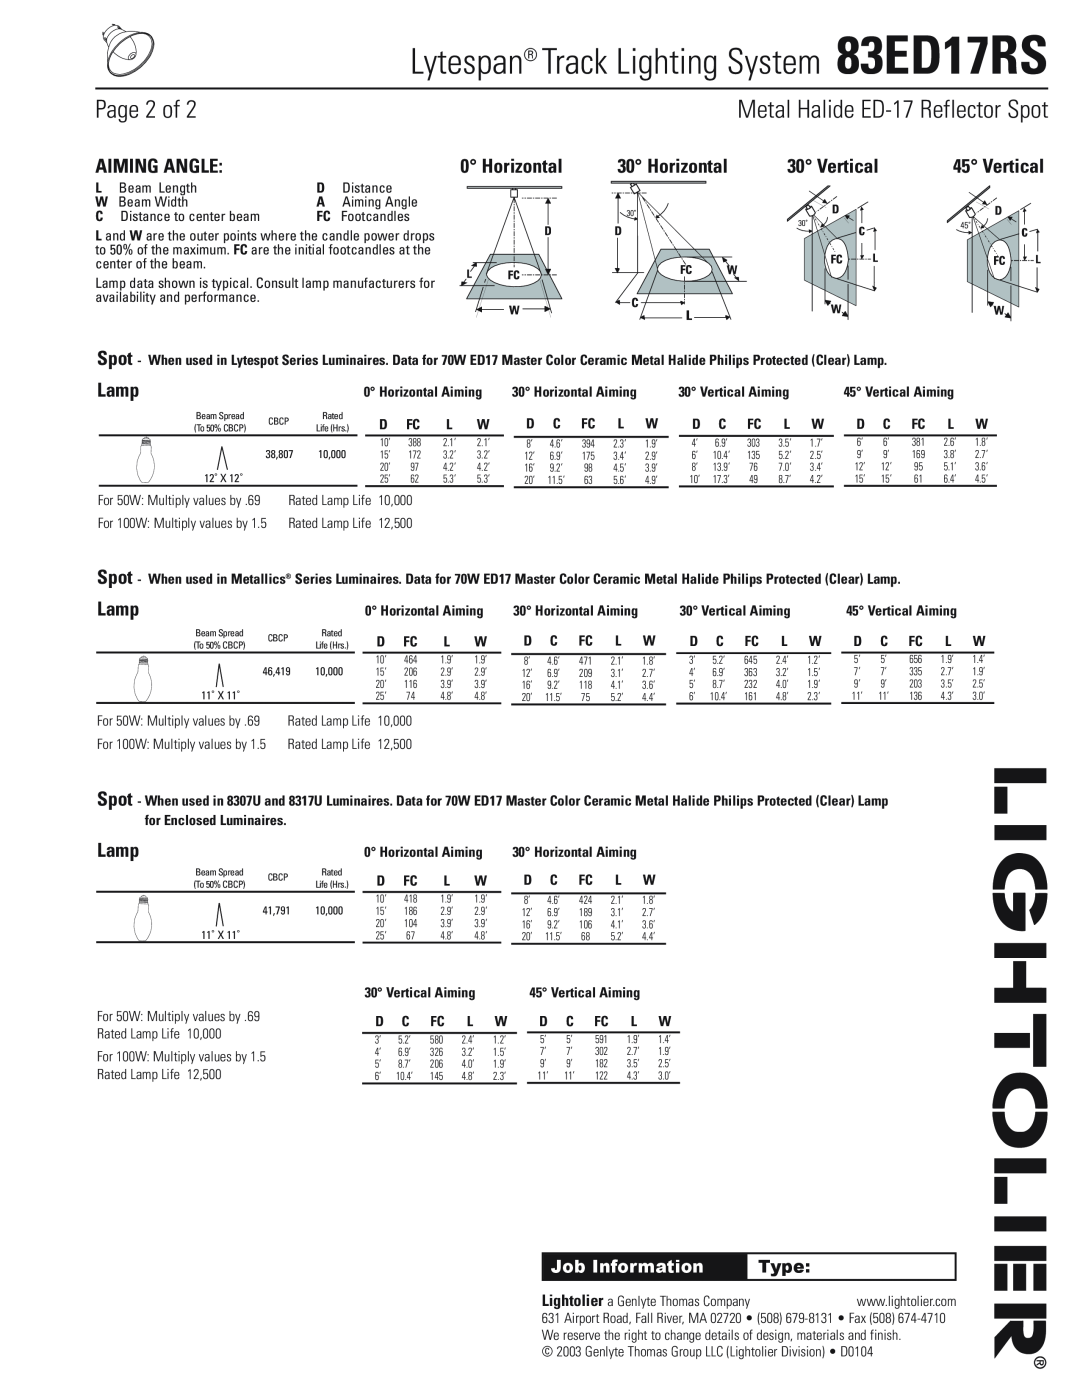 Lightolier 83ED17RS Metal Halide ED-17Reflector Spot, Aiming Angle, Horizontal, Vertical, Lamp, Page 2 of, Job Information 